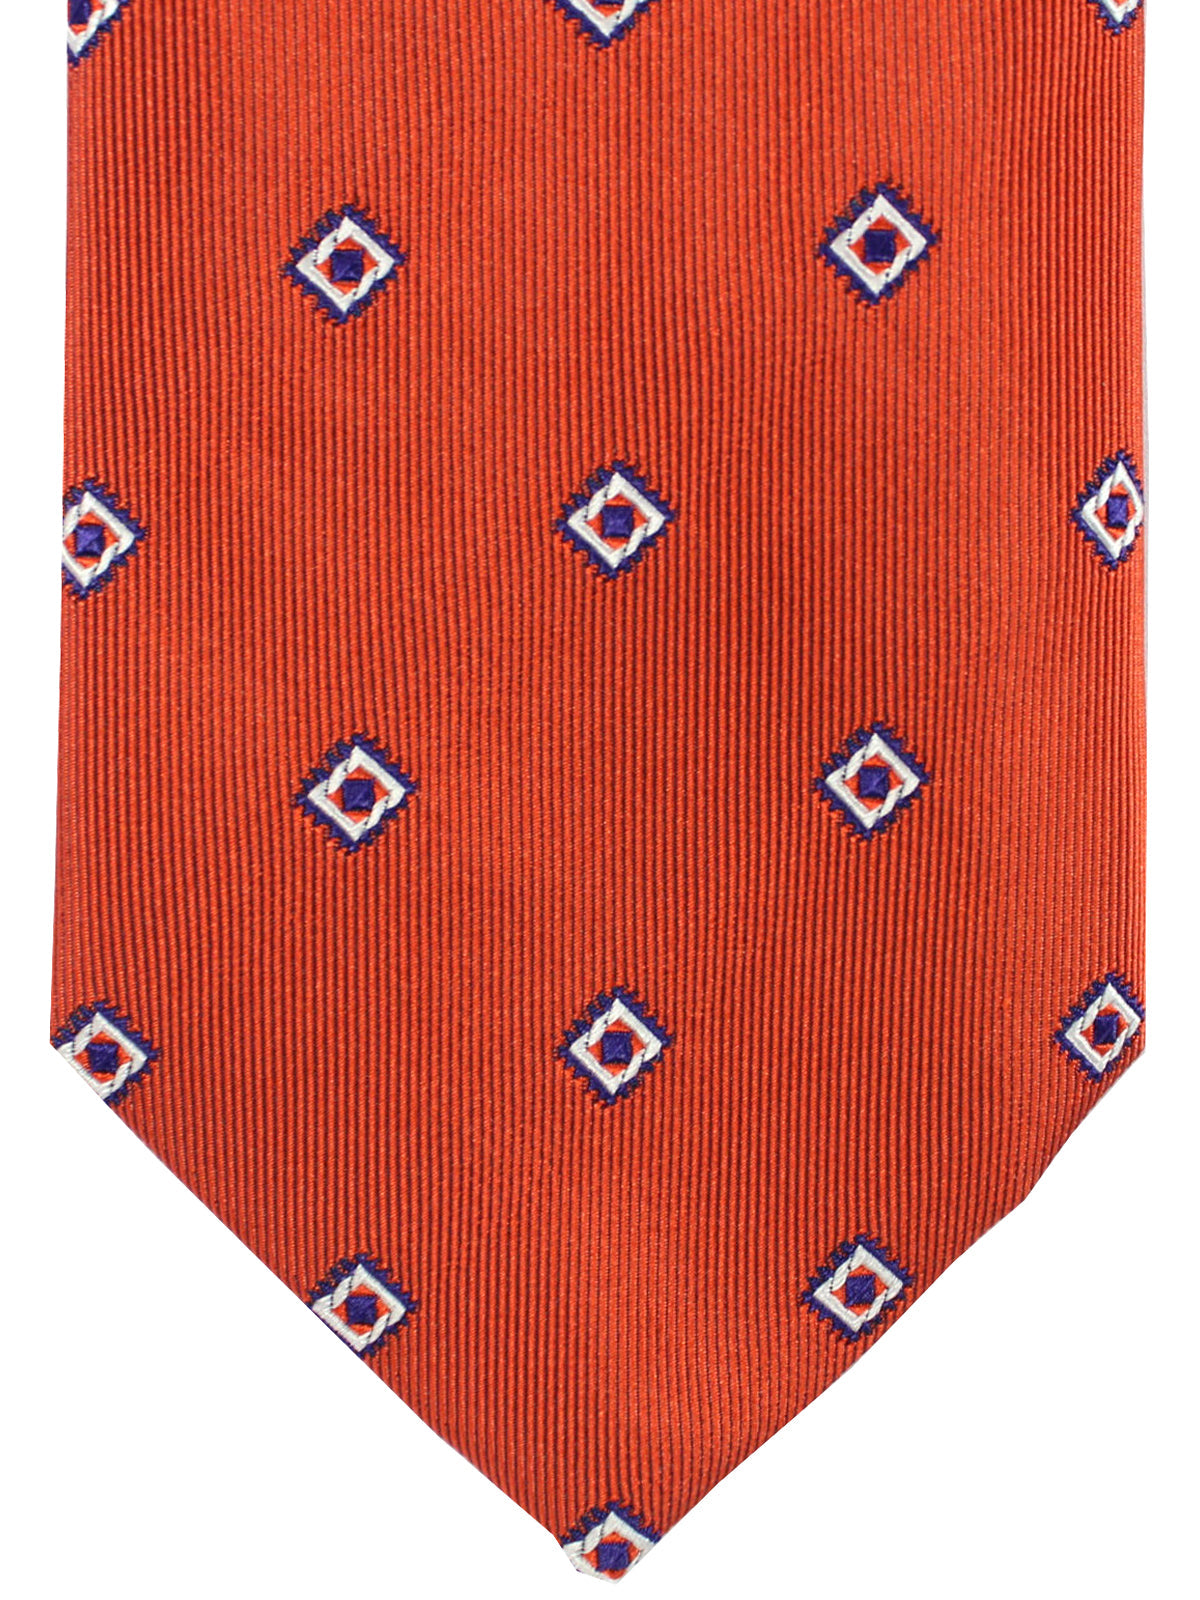 Massimo Valeri Extra Long Tie Orange Geometric